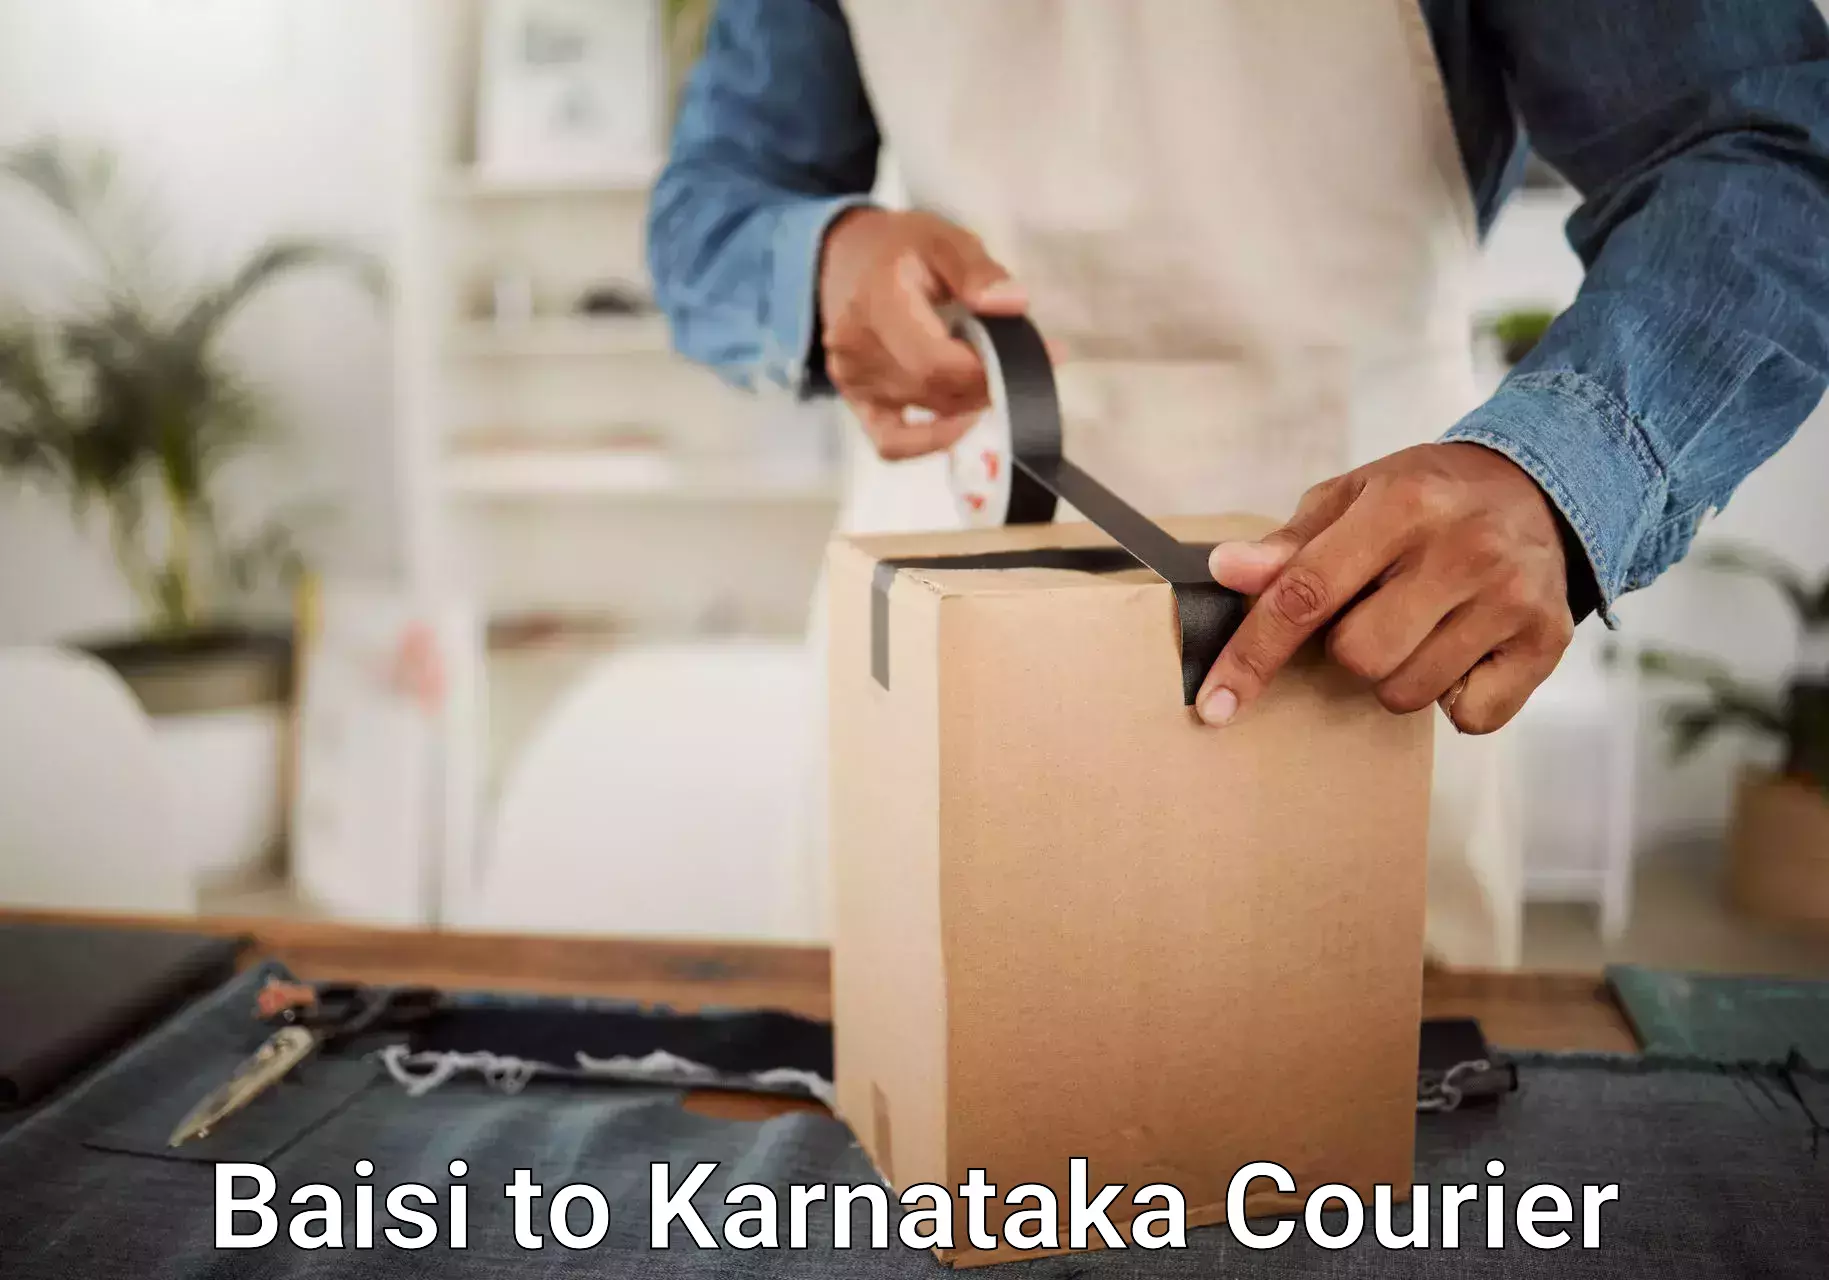 Luggage transport company Baisi to Karnataka